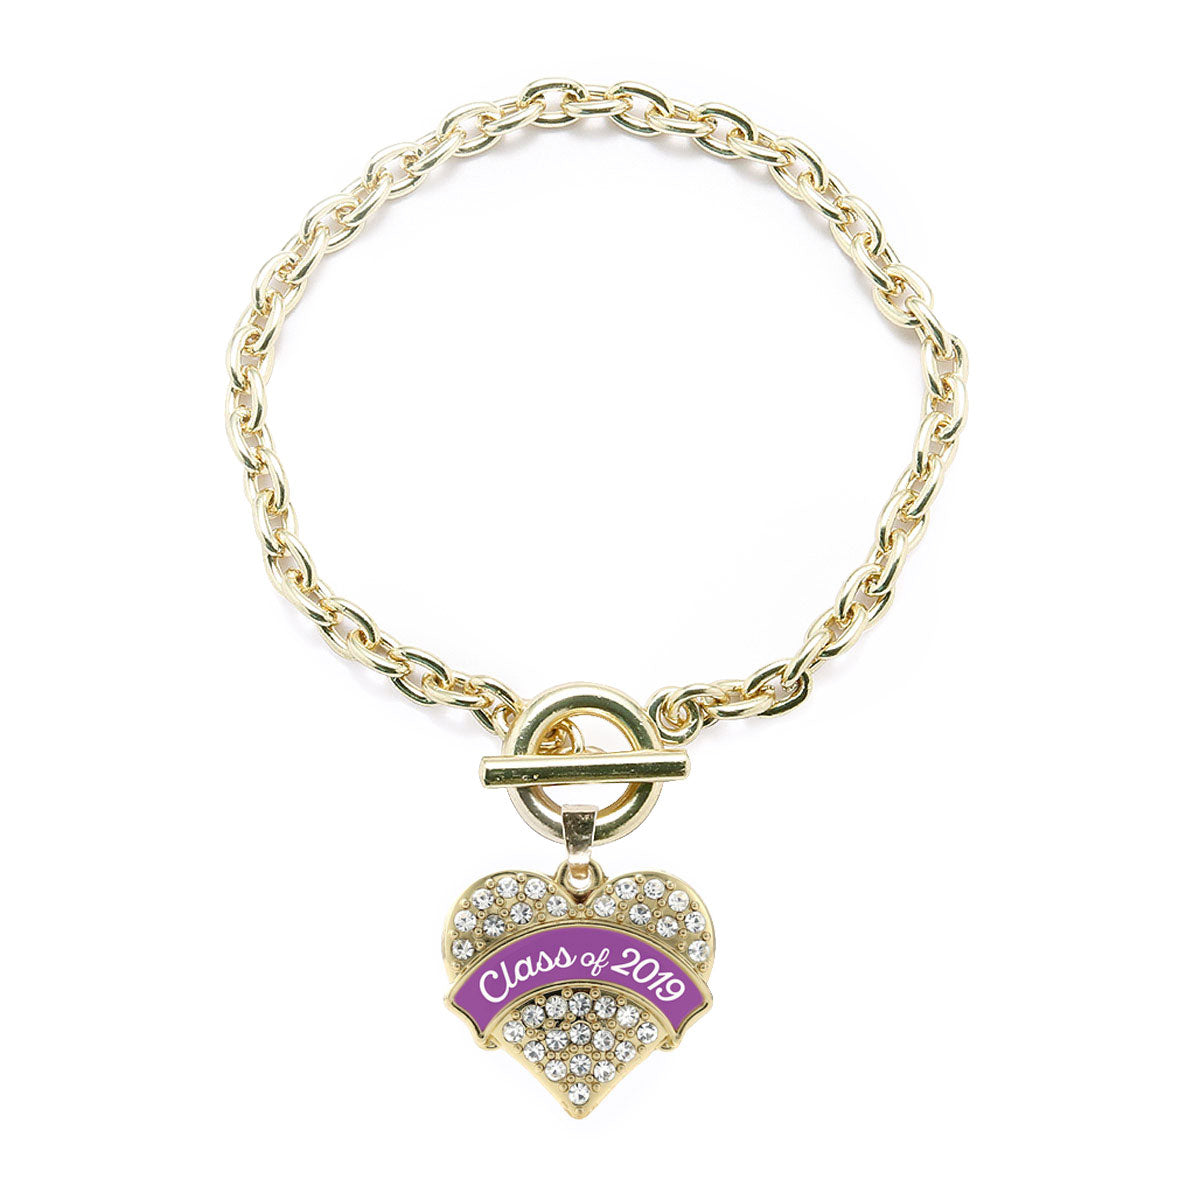 Gold Class of 2019 - Purple Pave Heart Charm Toggle Bracelet